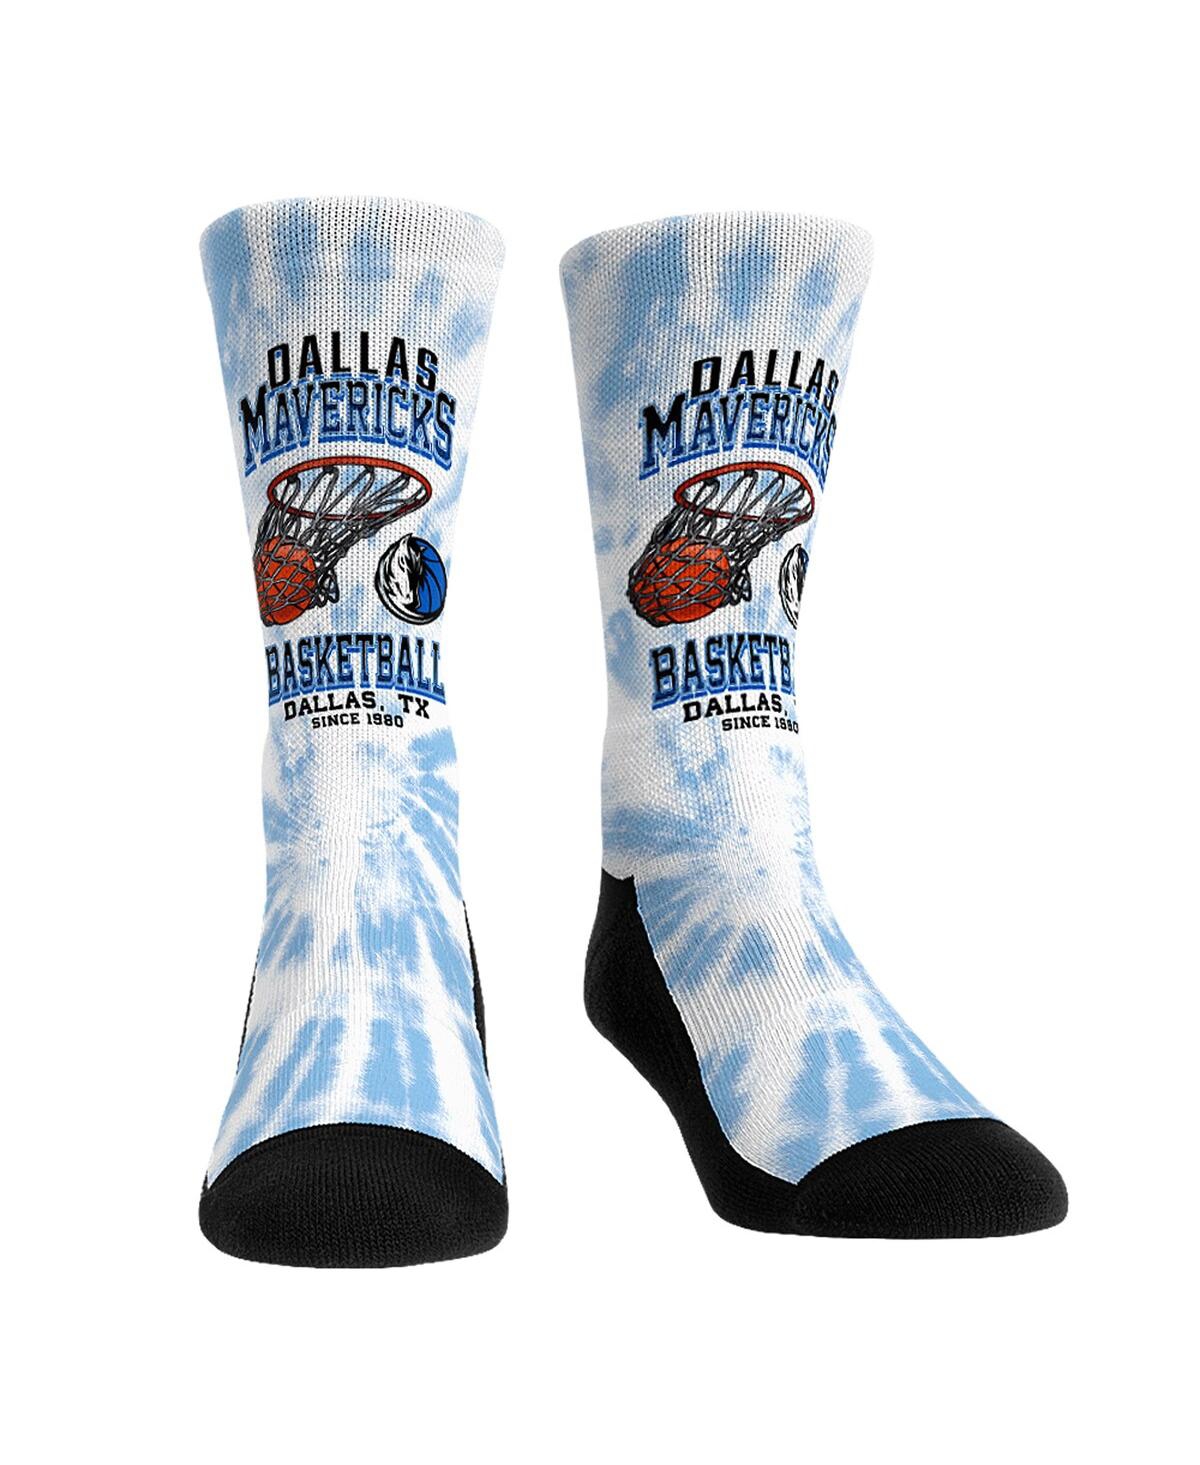 Rock 'em Men's And Women's  Socks Dallas Mavericks Vintage-like Hoop Crew Socks In Multi